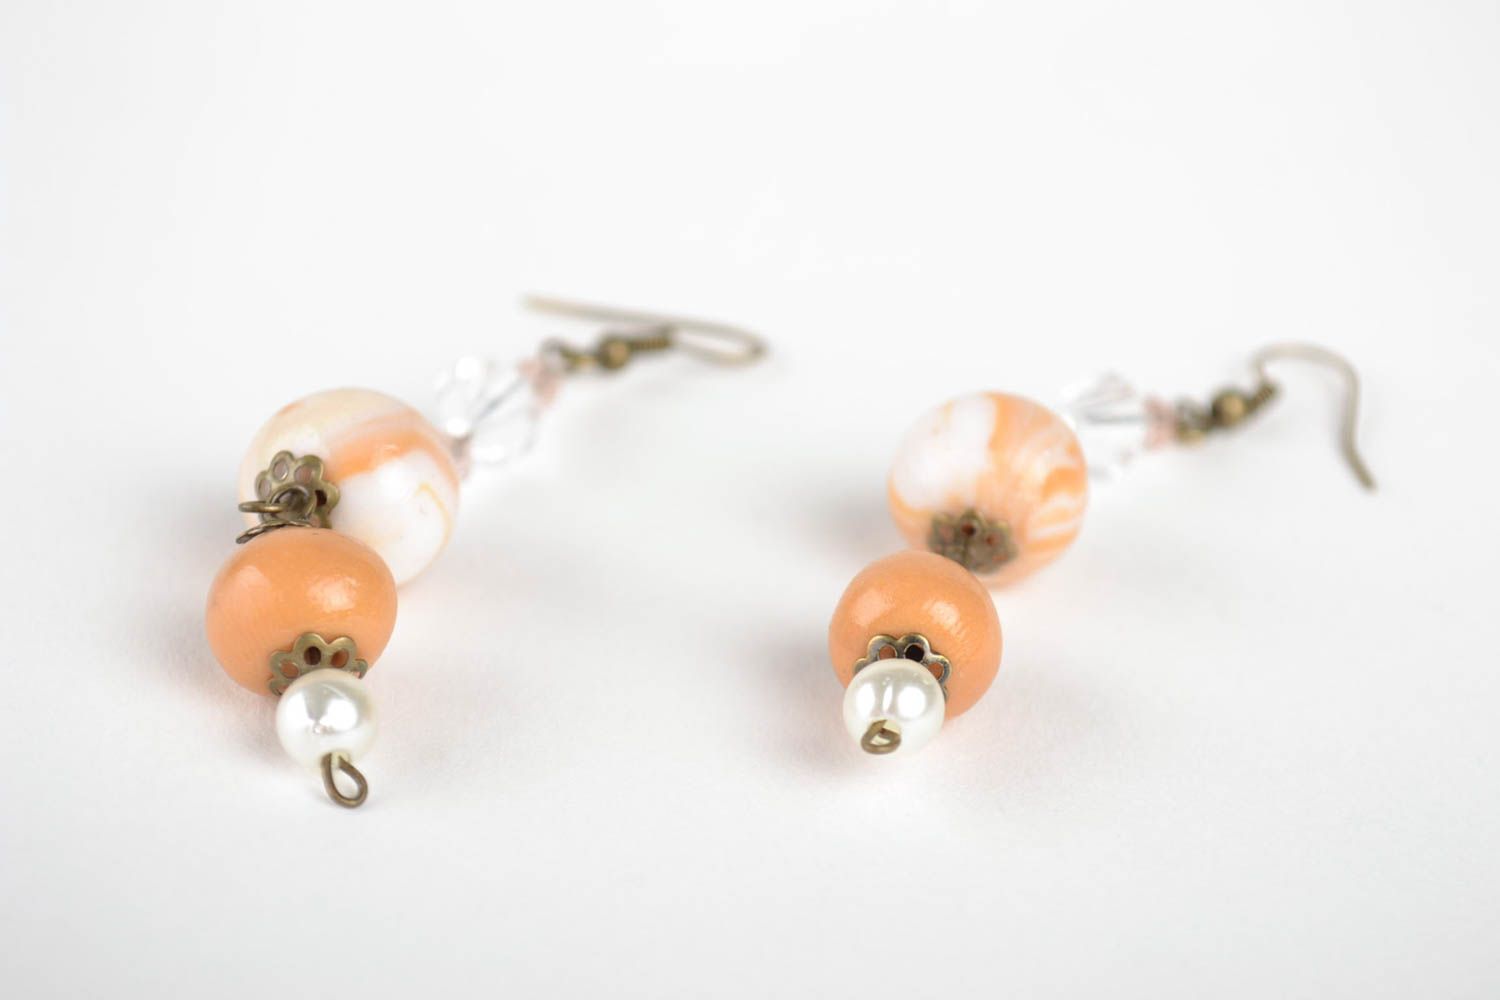 Handmade earrings bead earrings fashion jewelry polymer clay gifts for girls photo 3